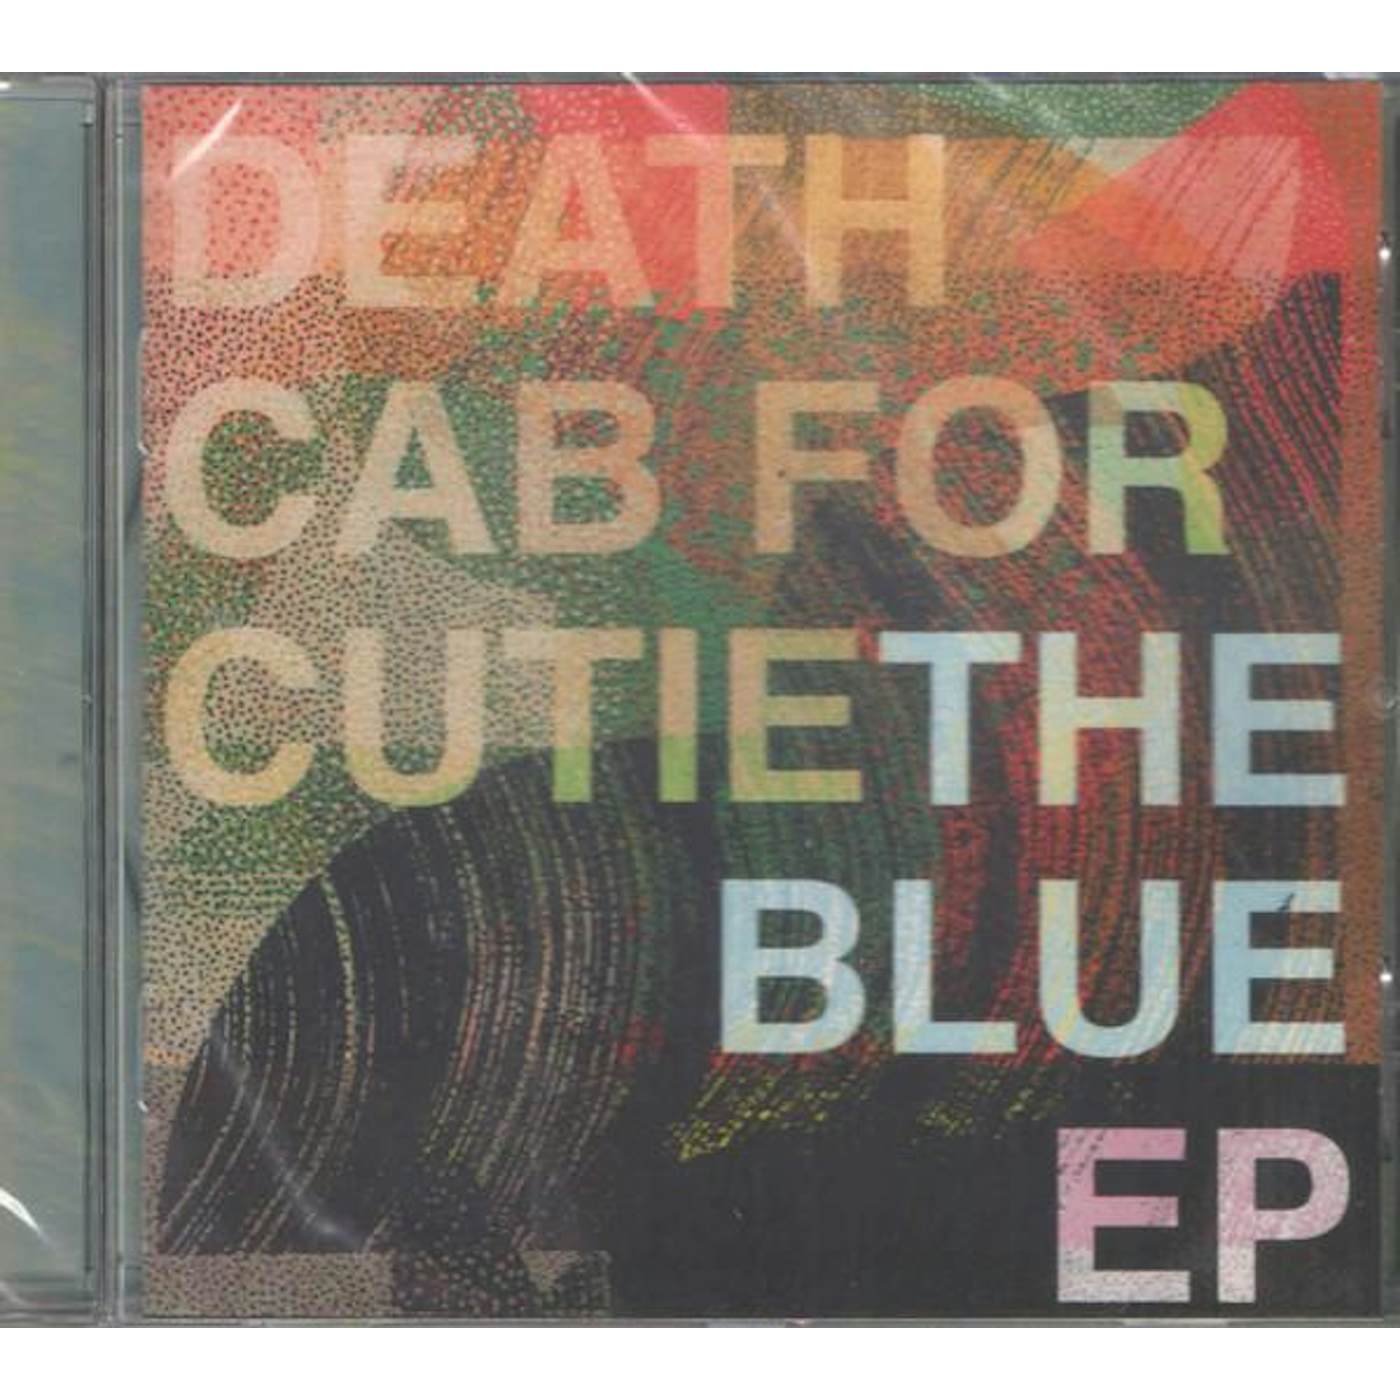 Death Cab for Cutie BLUE EP CD